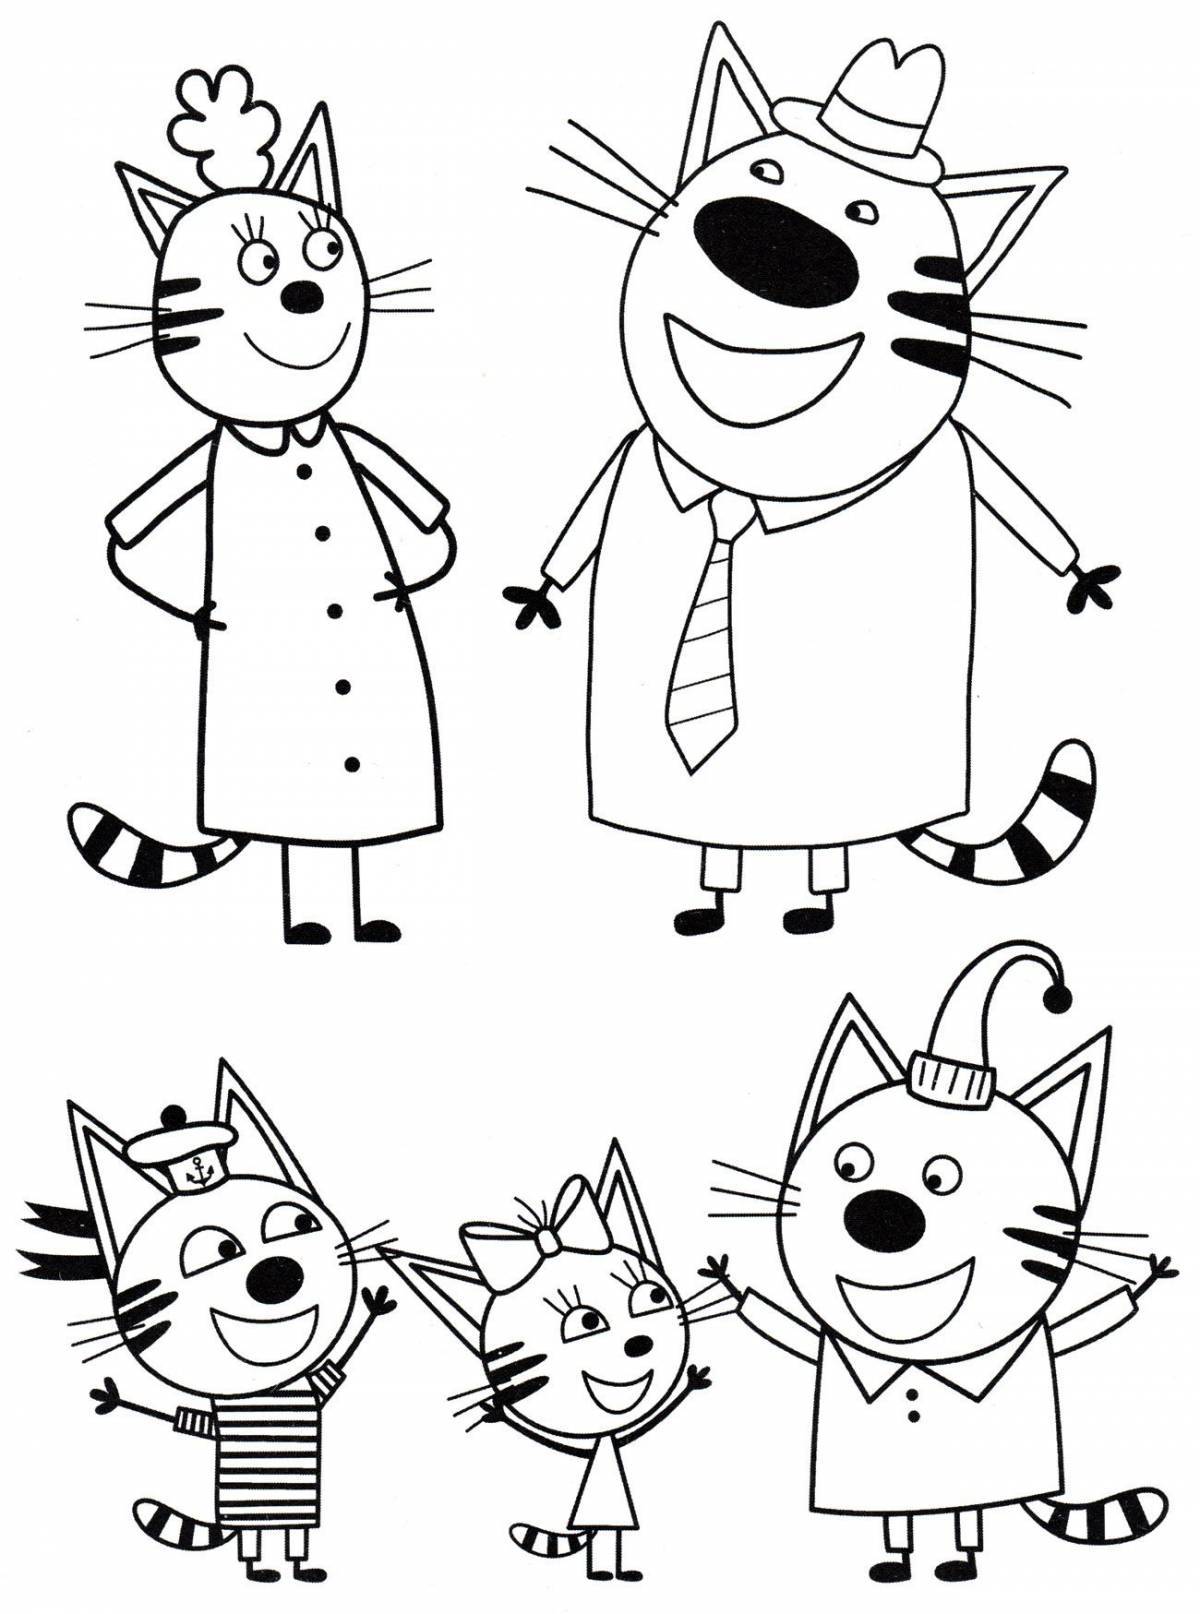 Fun coloring book 3 cats for preschool children